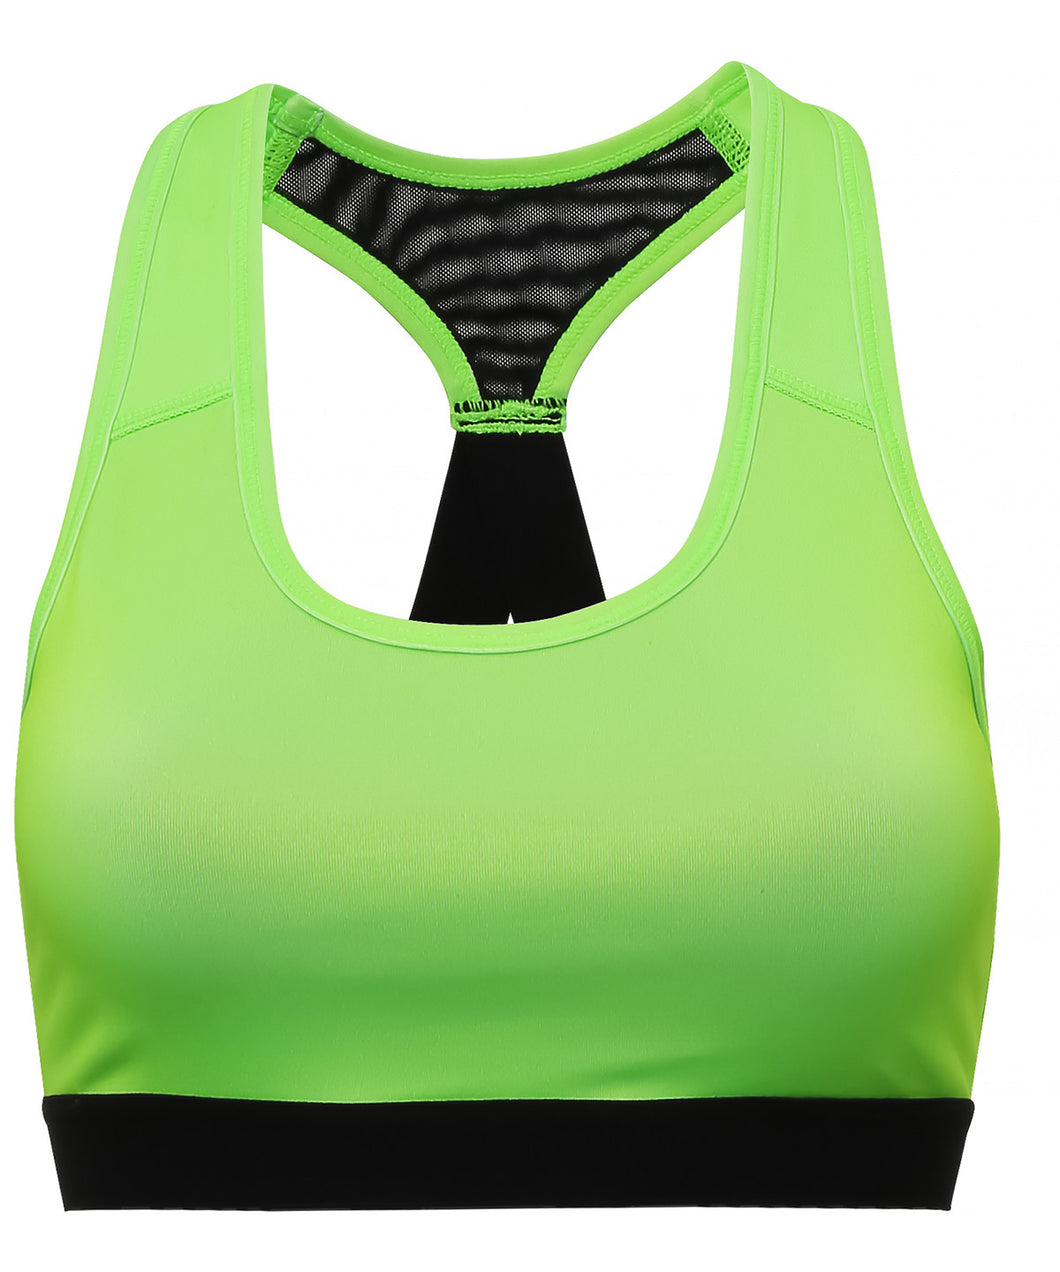 Bra-performance sports bra (medium impact) Available in 4 colours